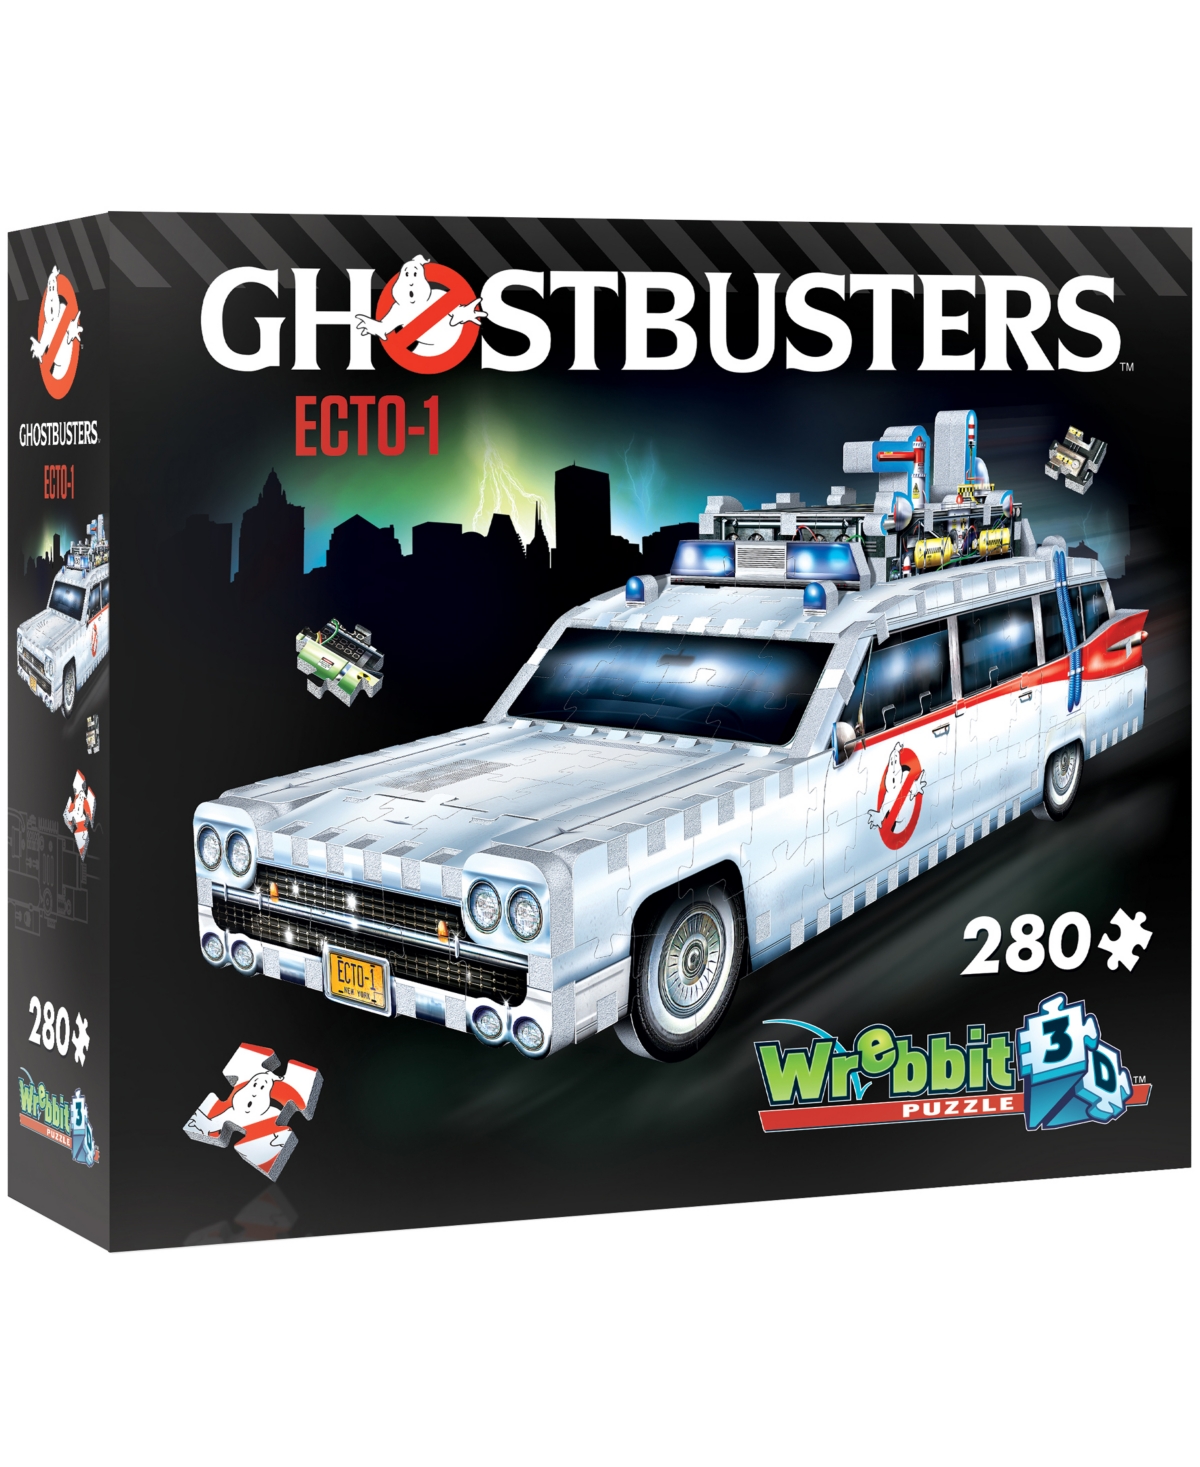 University Games Kids' Wrebbit Ghostbusters Ecto-1 3d Puzzle, 280 Pieces In No Color